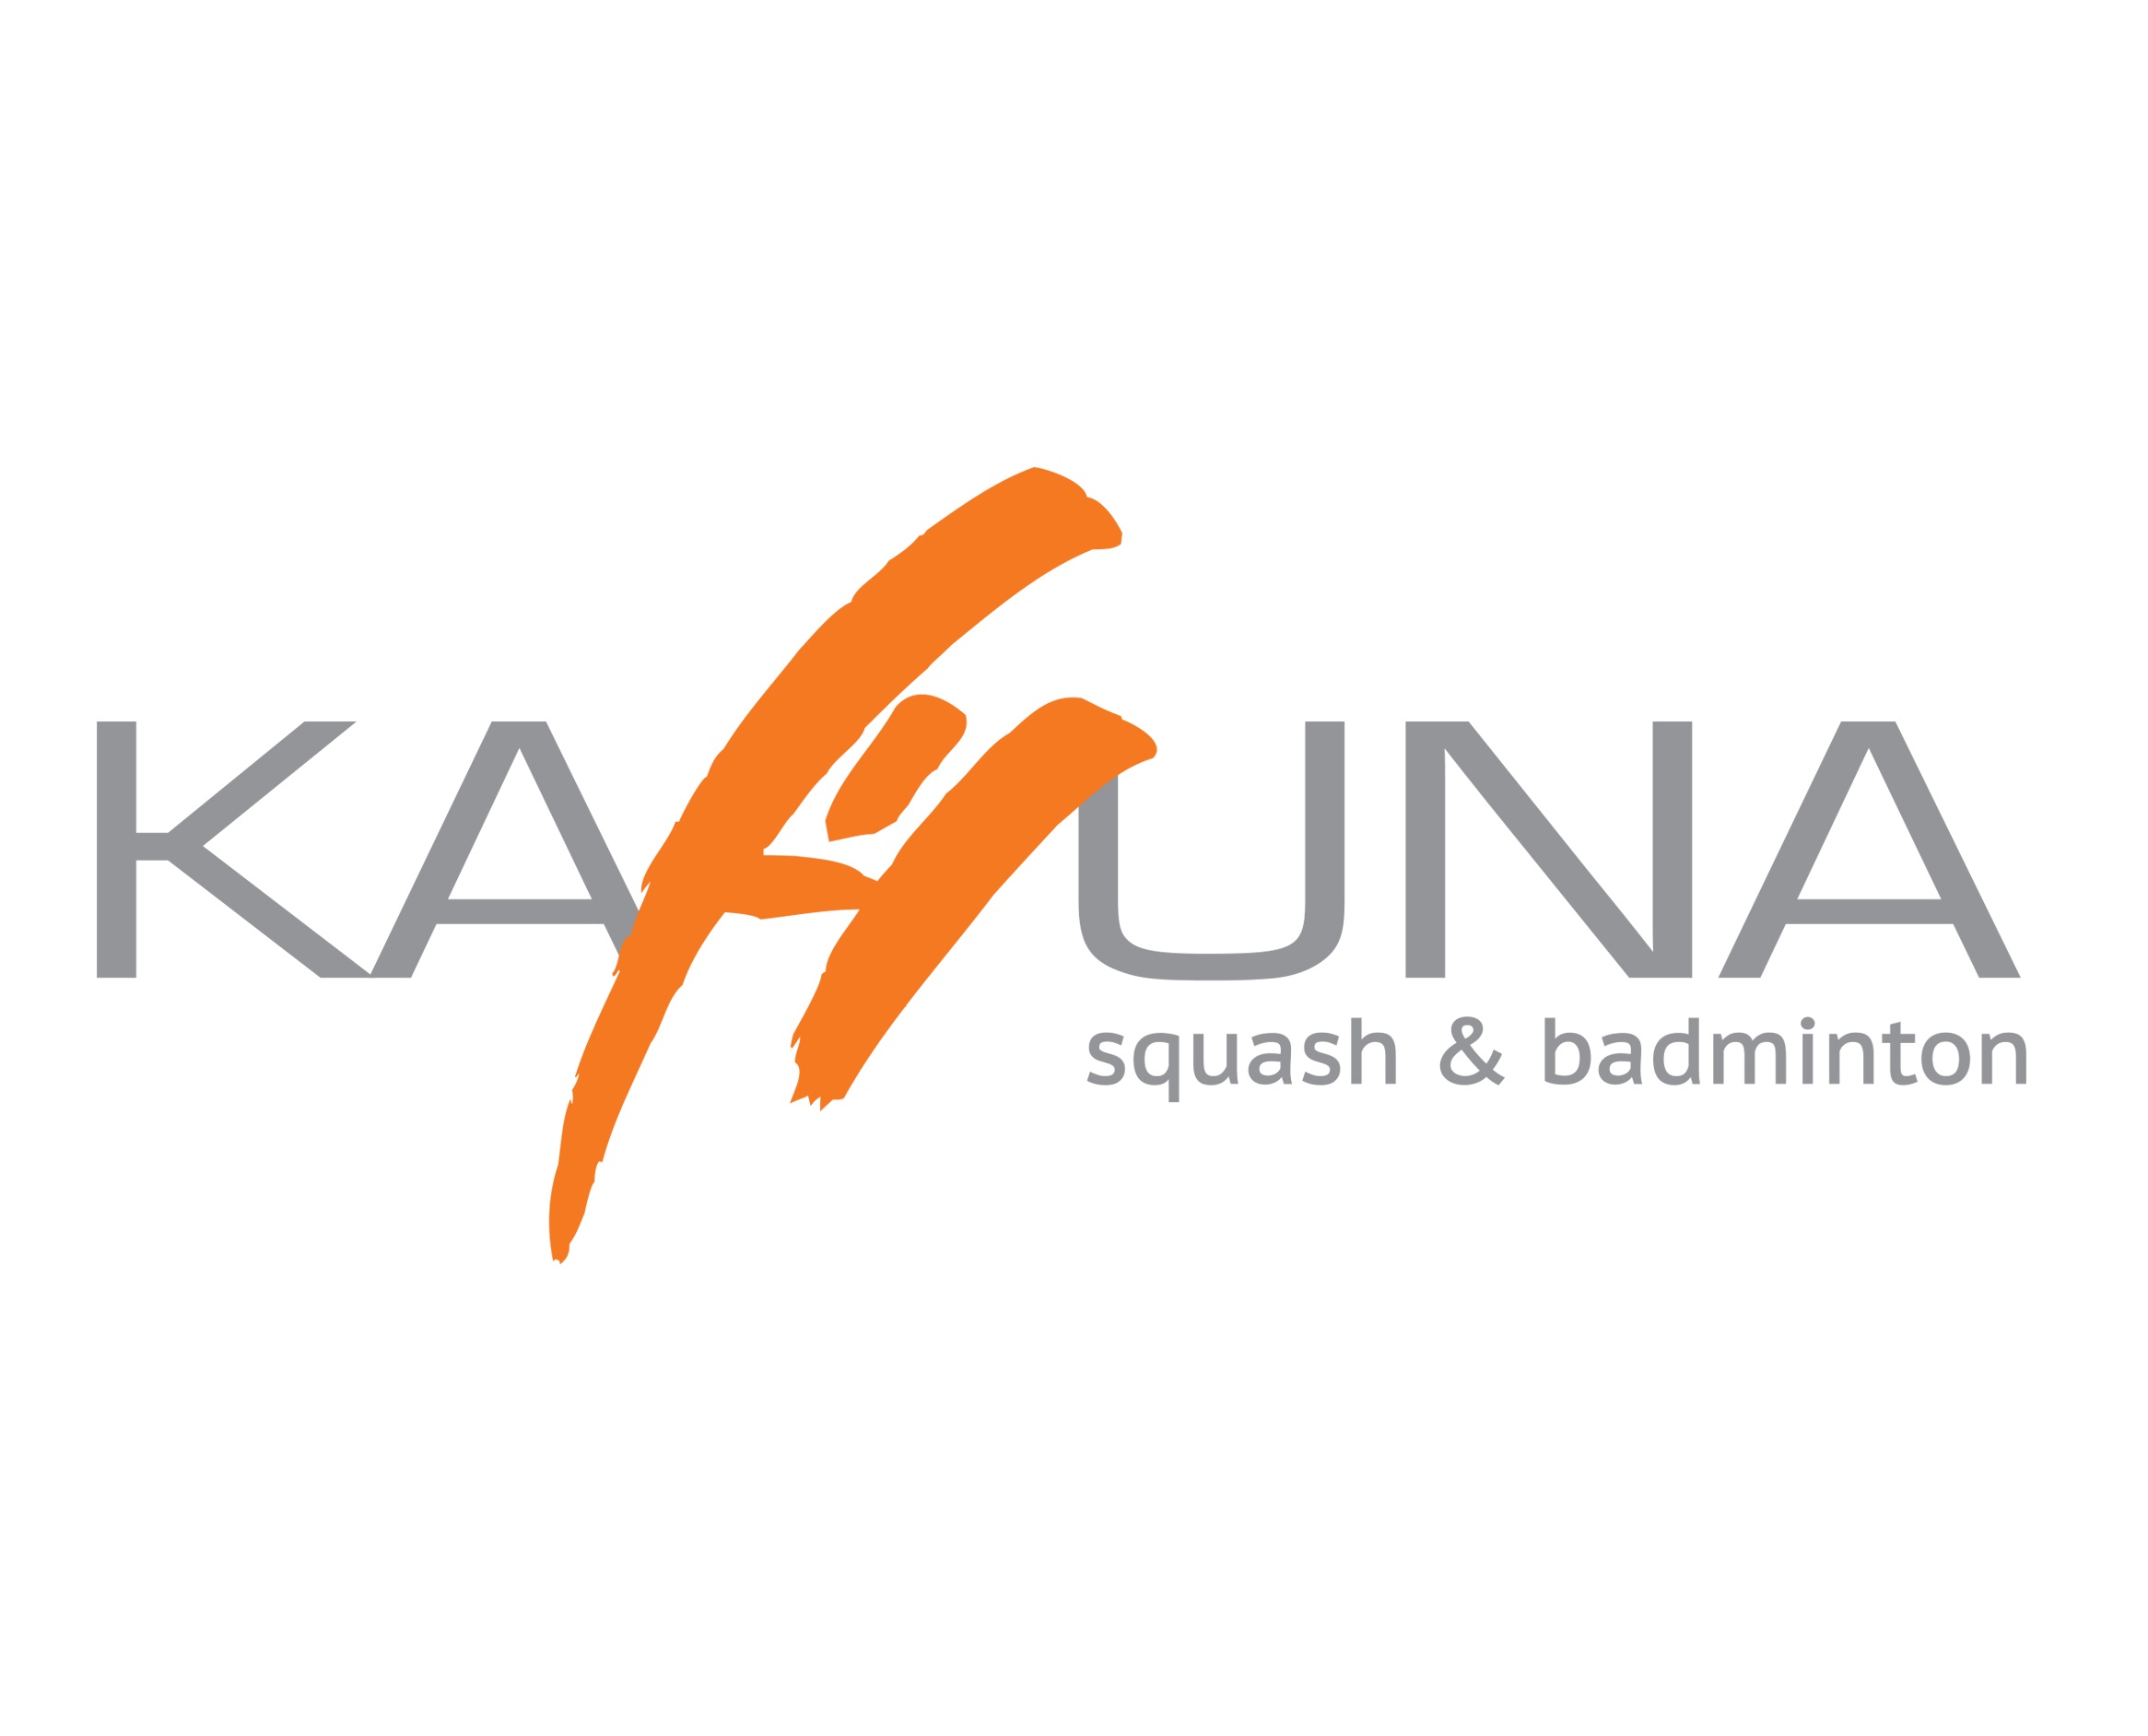 Kahuna squash & badminton